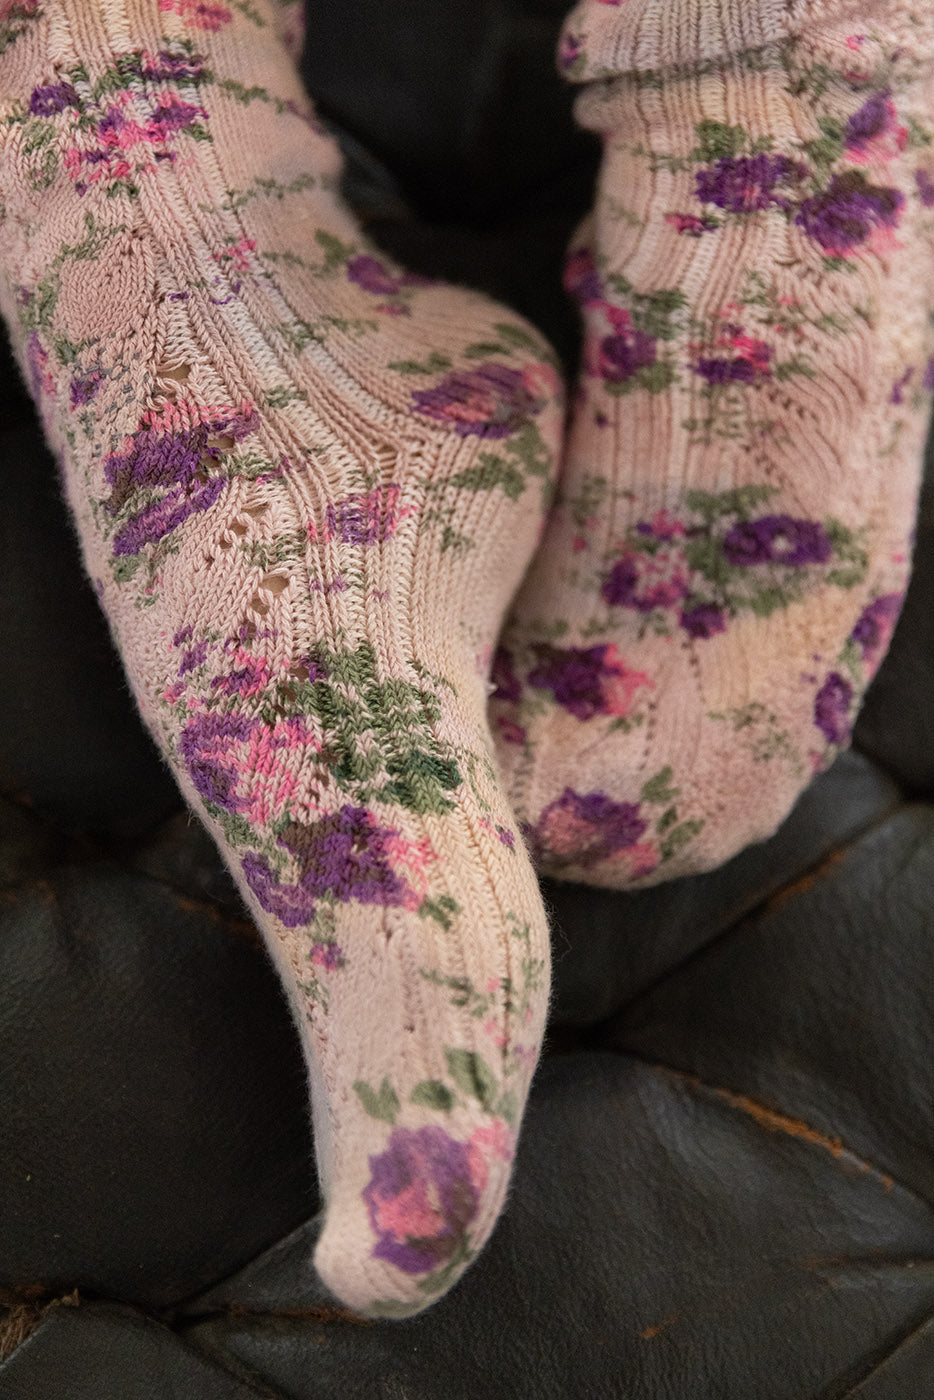 Floral OTK Socks